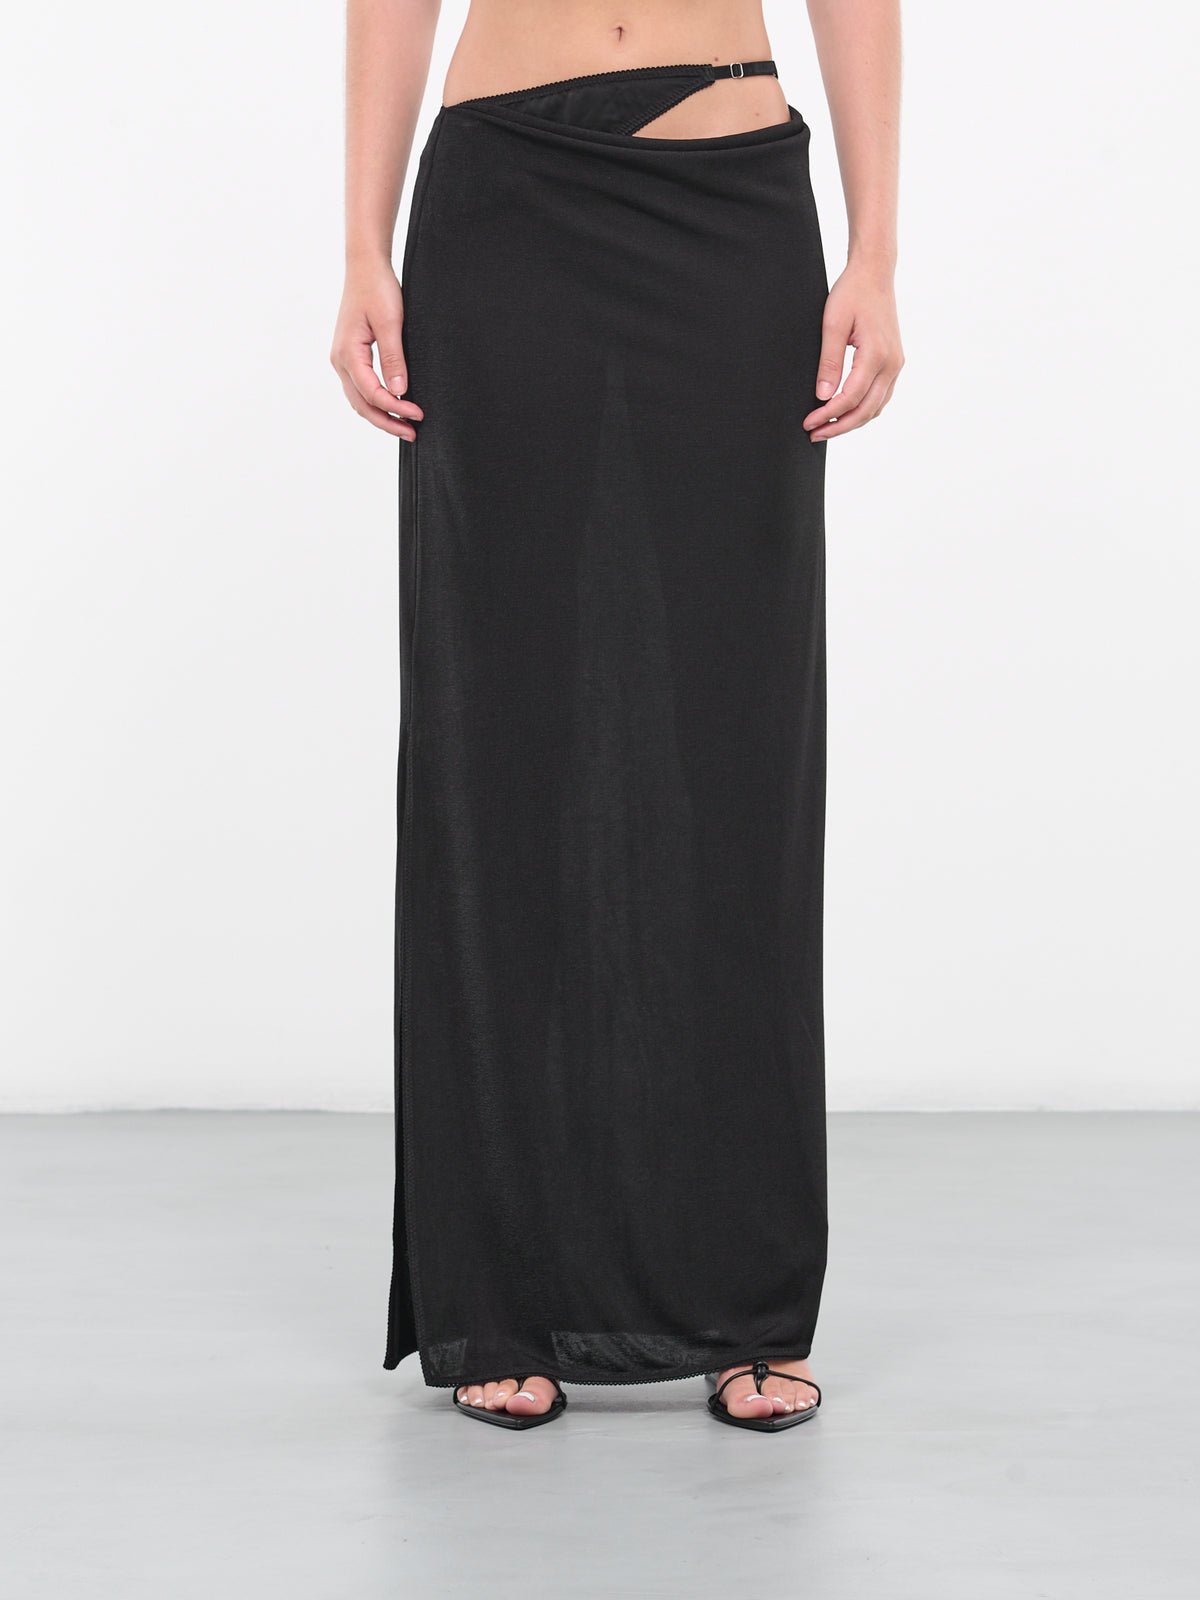 Kerry Skirt (PF2346-BLACK)